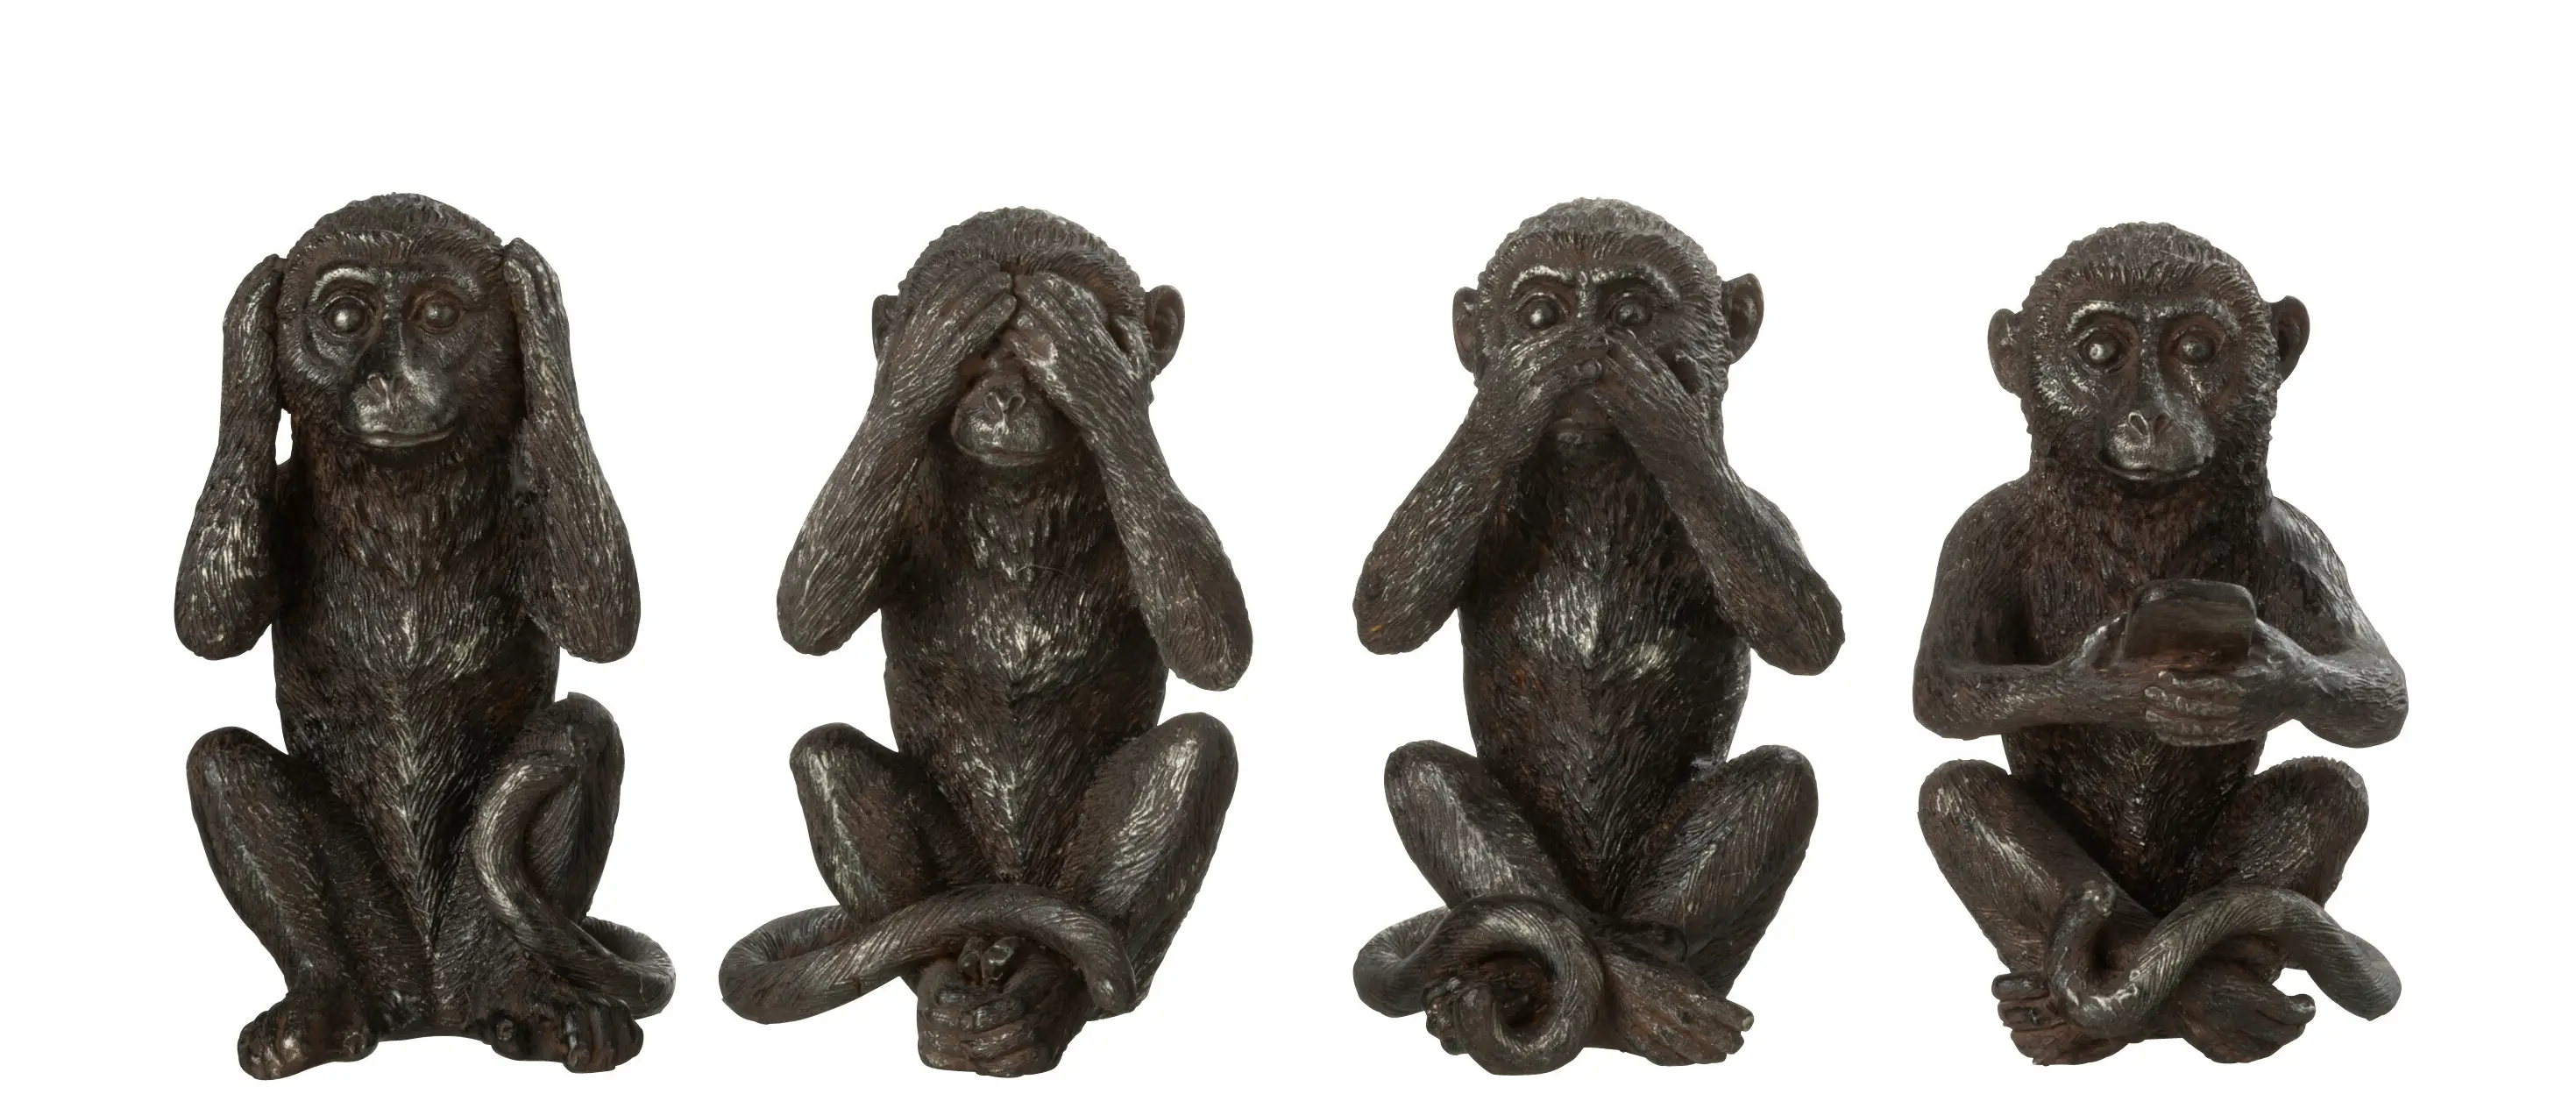 Poly 4 sitzende Affenfiguren H枚he 12cm